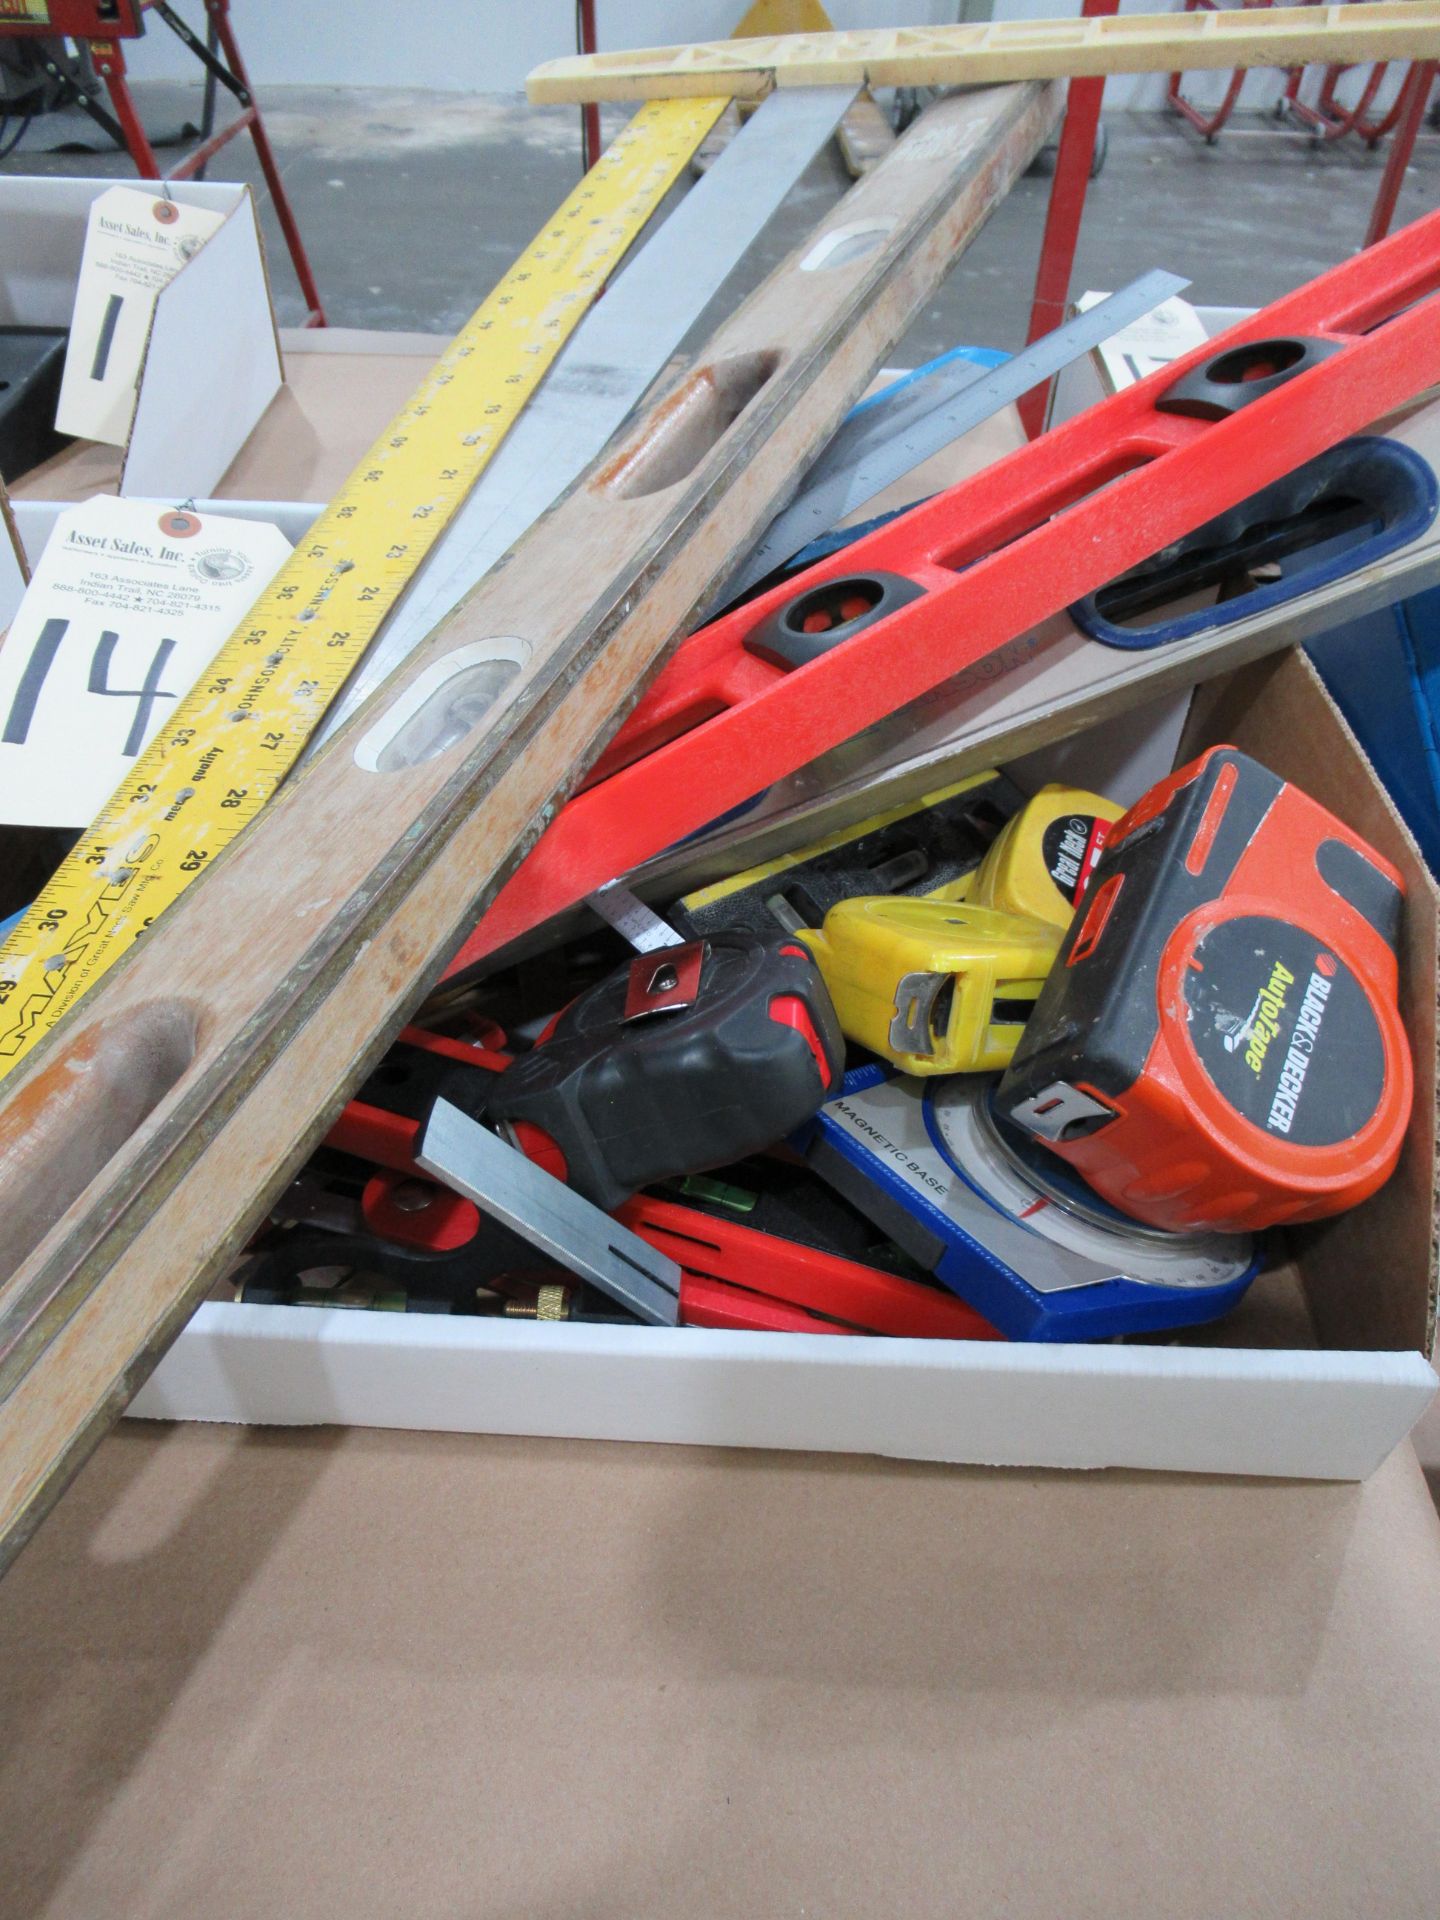 Measurement Tools including Tape Measures, Levels, Protractors, Rulers, Meter Sticks